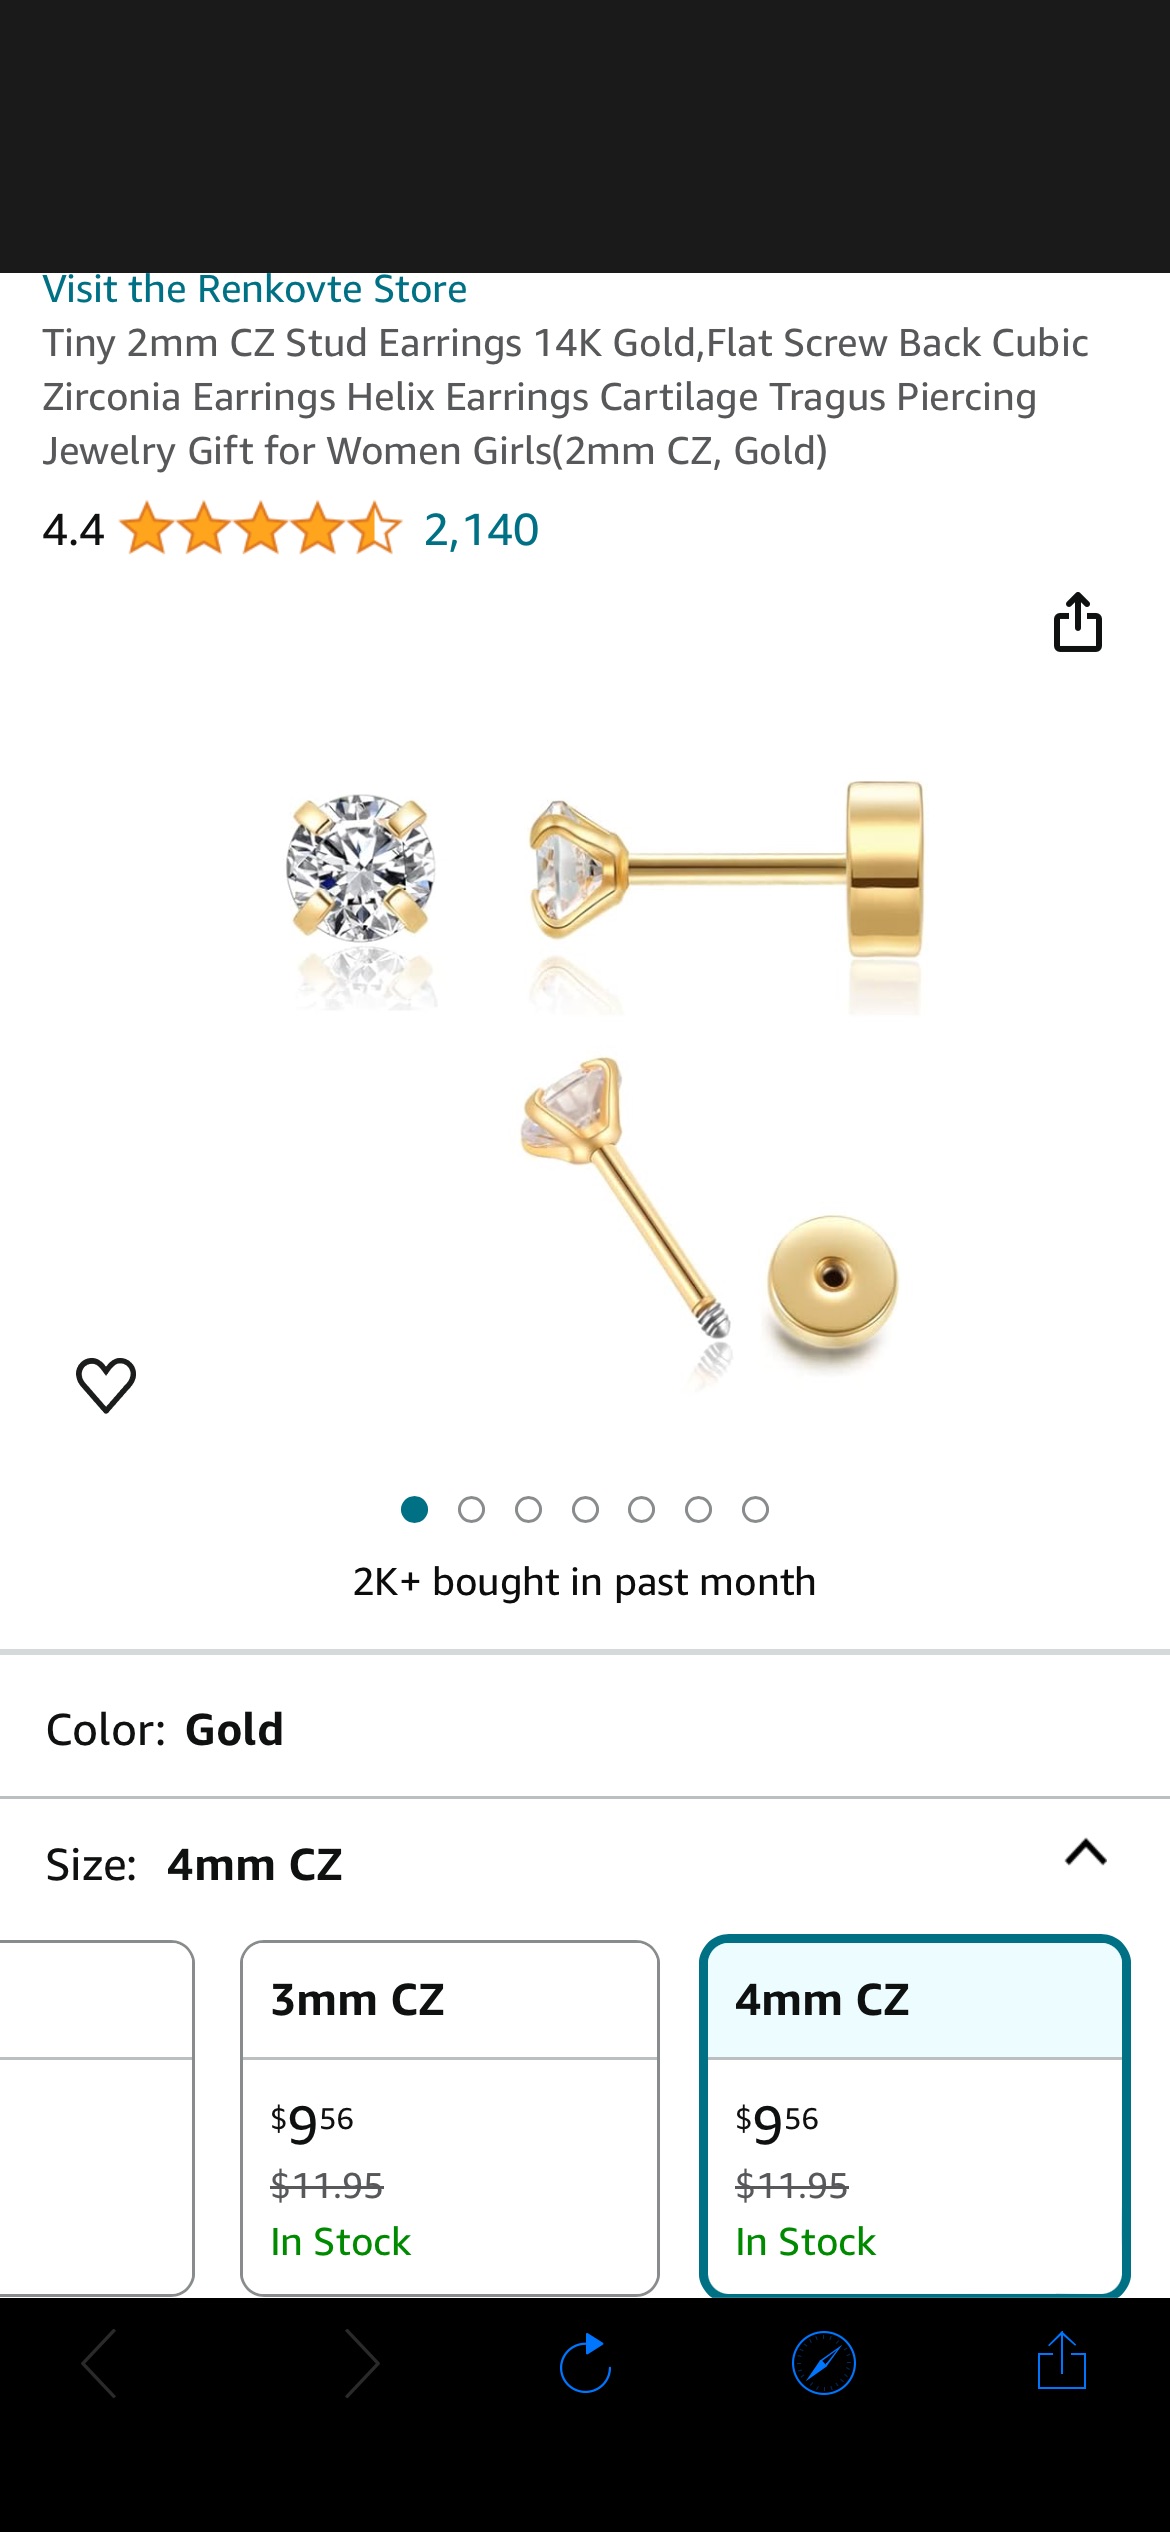 Amazon.com: Tiny 2mm CZ Stud Earrings 14K Gold,Flat Screw Back Cubic Zirconia Earrings Helix Earrings Cartilage Tragus Piercing Jewelry Gift for Women Girls(2mm CZ, Gold) : Handmade Products